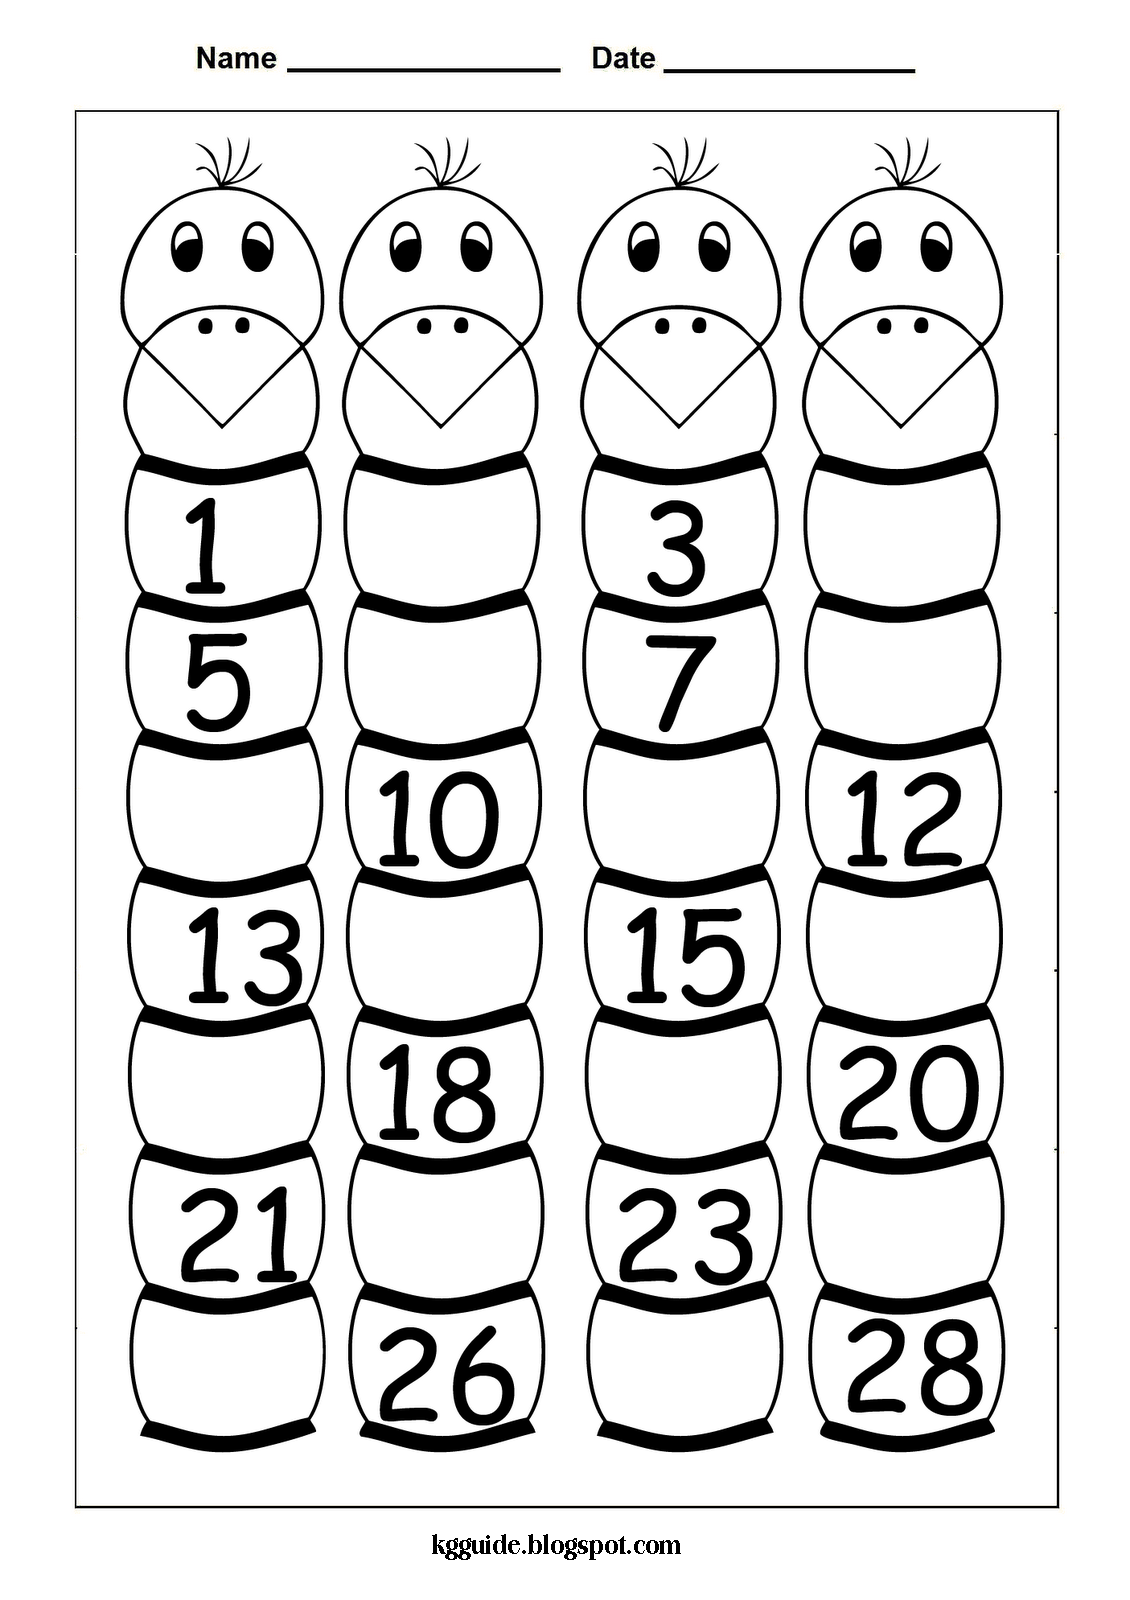 Kindergarten Math Worksheets Missing Numbers Image